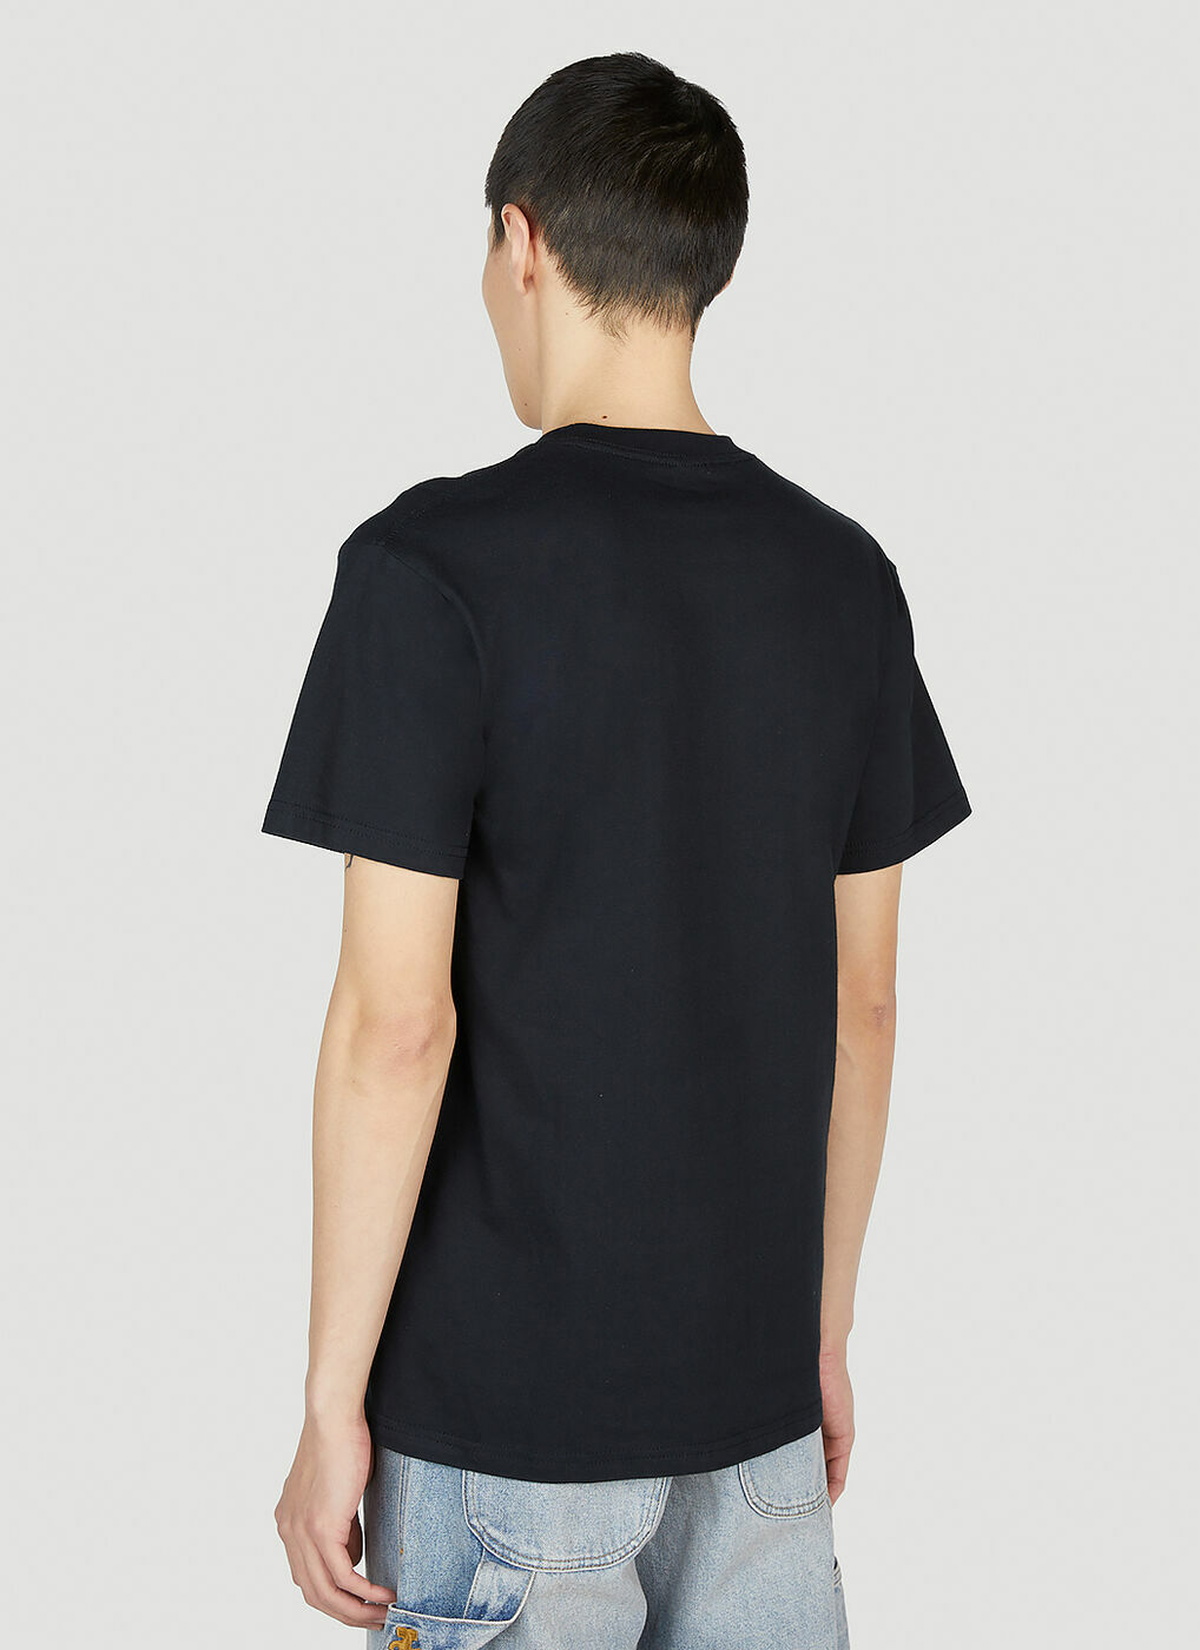 DTF.NYC - Satoshi Nakamoto T-Shirt in Black